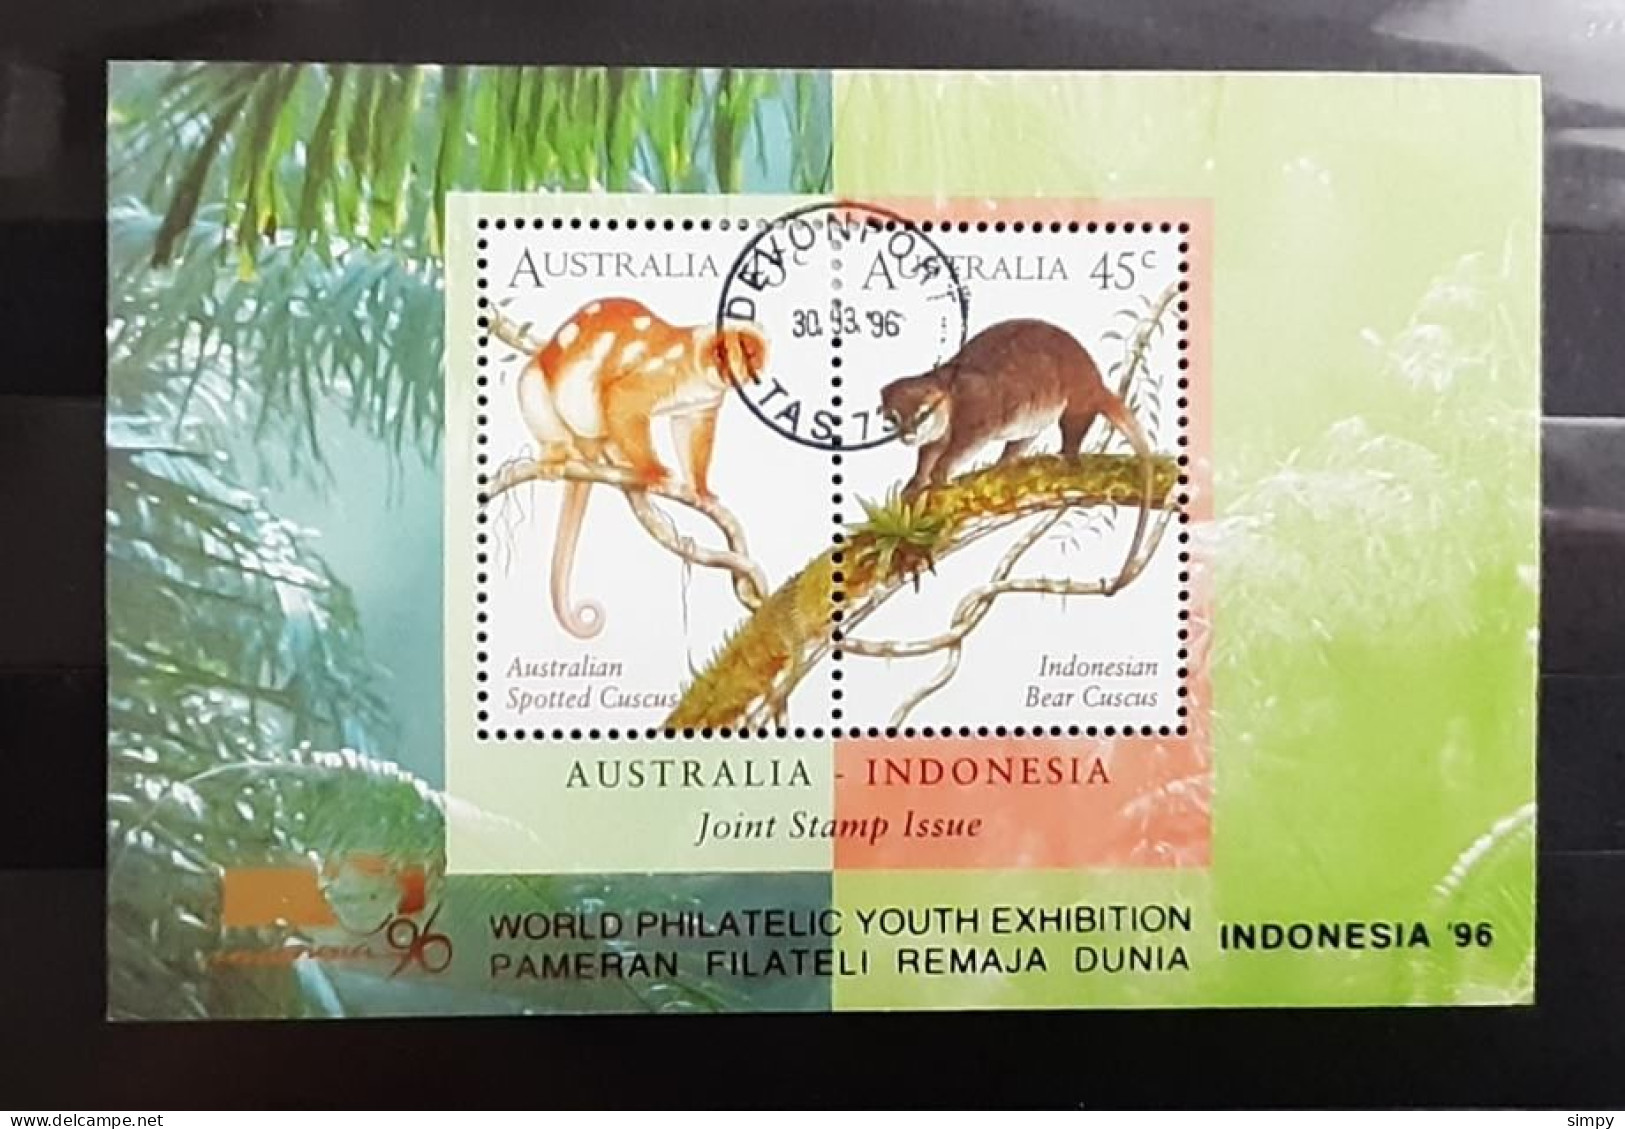 AUSTRALIA 1996 Cuscus Stamp Show Exhibition Indonesia Used Mini Sheet Block - Blocks & Kleinbögen